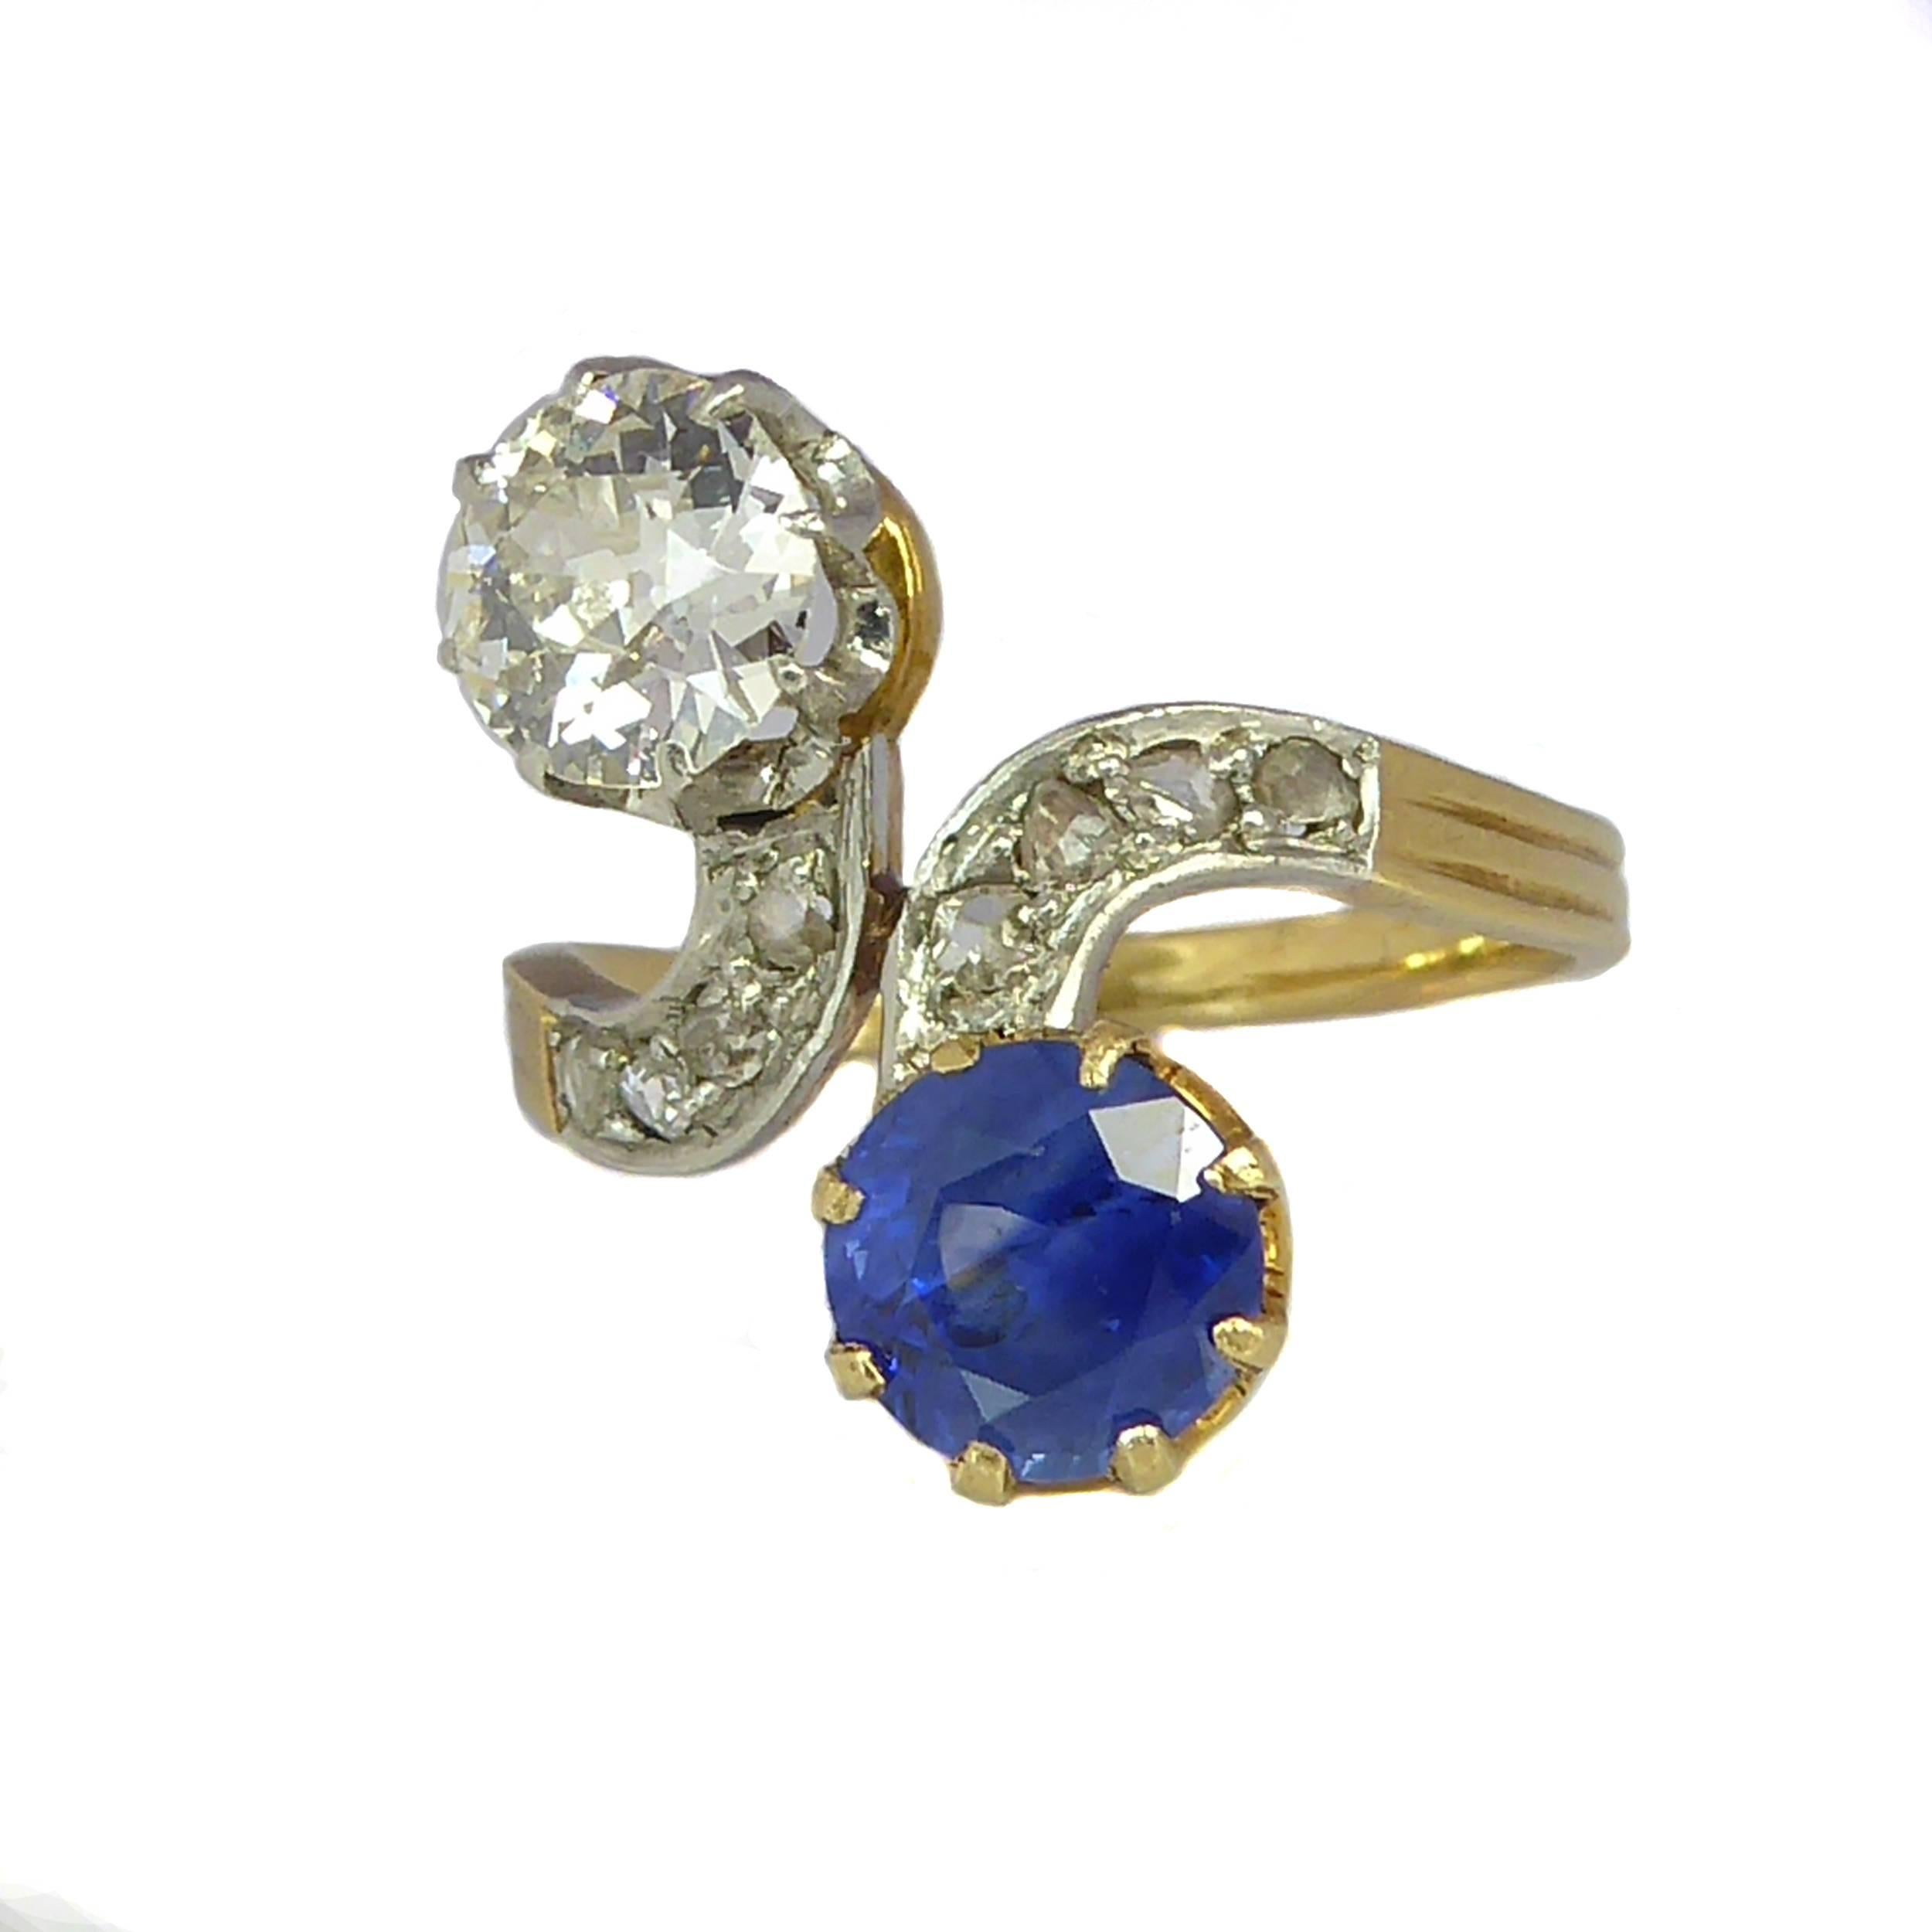 Rose Cut Art Deco Diamond Sapphire Ring, Toi et Moi, 18 Carat Gold, circa 1920s